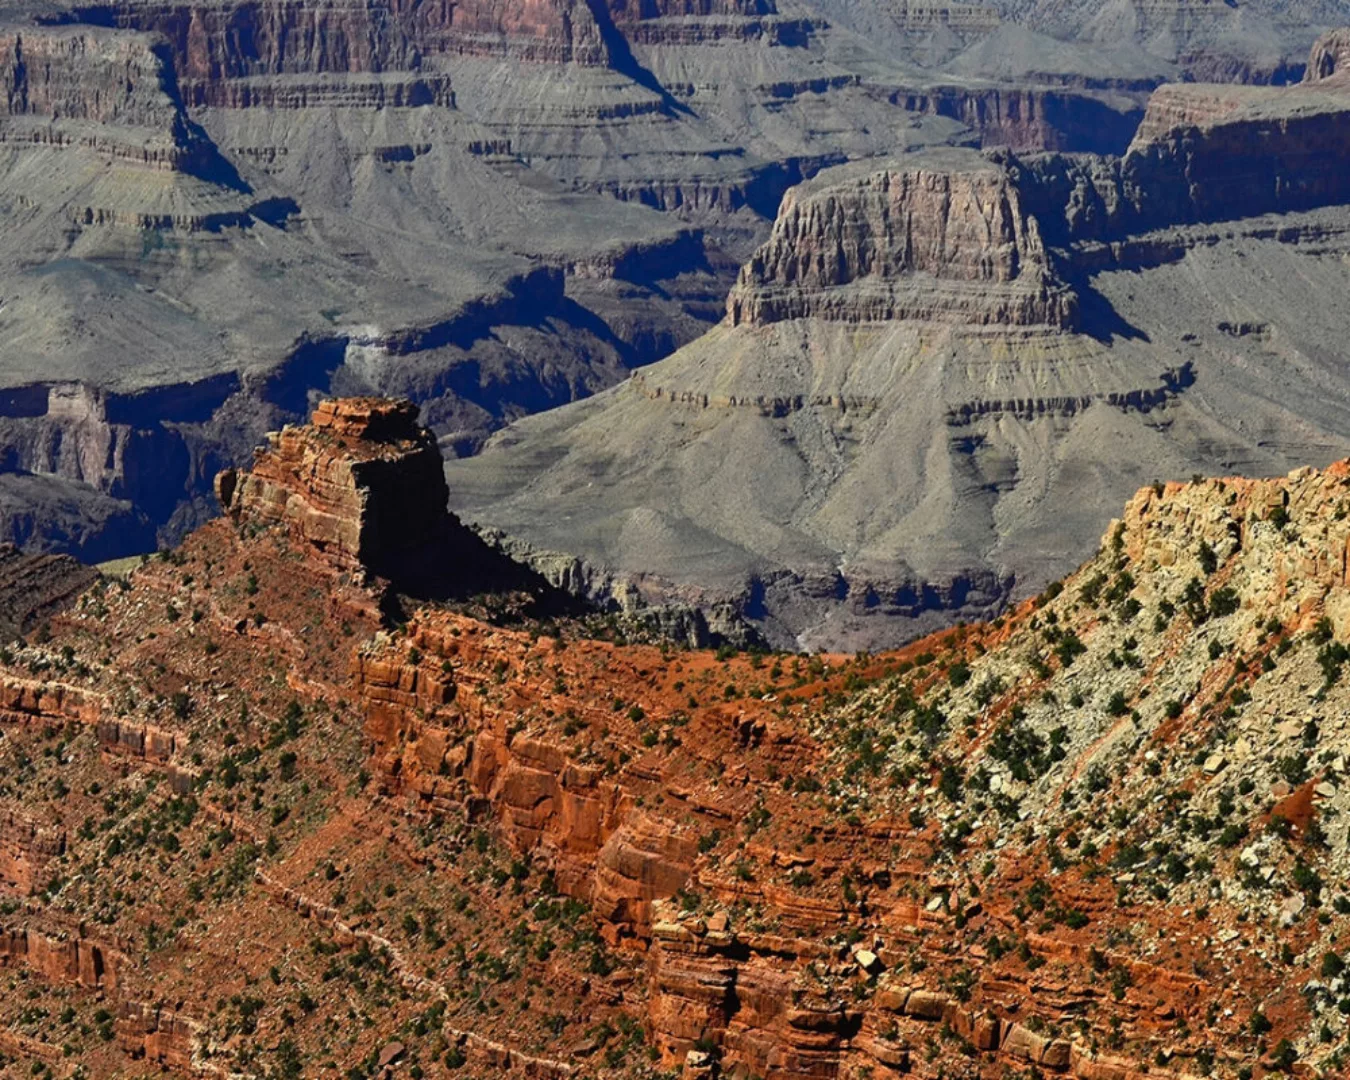 Fototapete "Canyon USA" 4,00x2,50 m / Glattvlies Perlmutt günstig online kaufen